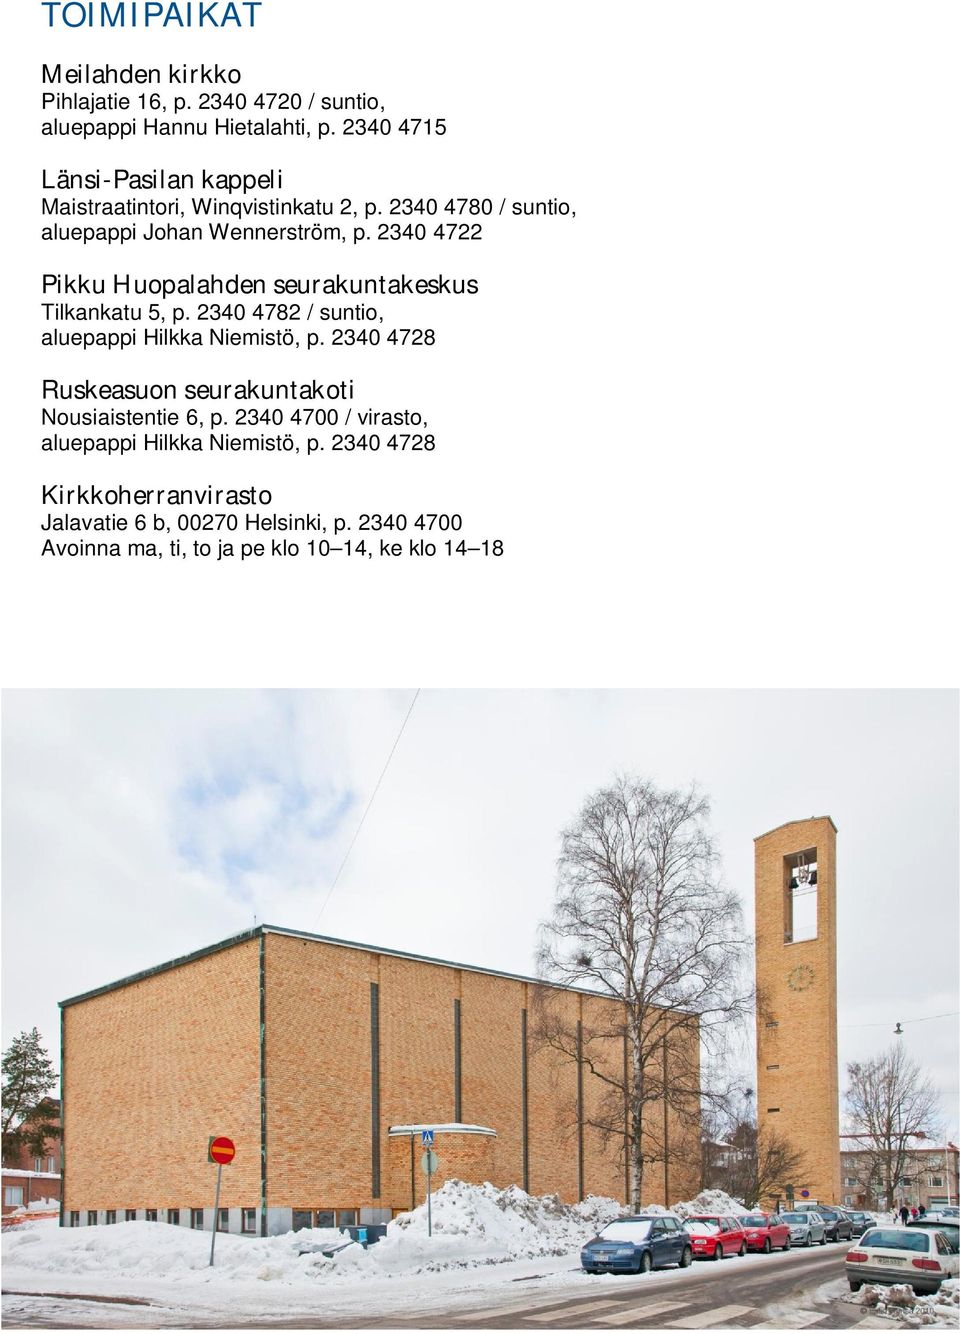 2340 4722 Pikku Huopalahden seurakuntakeskus Tilkankatu 5, p. 2340 4782 / suntio, aluepappi Hilkka Niemistö, p.